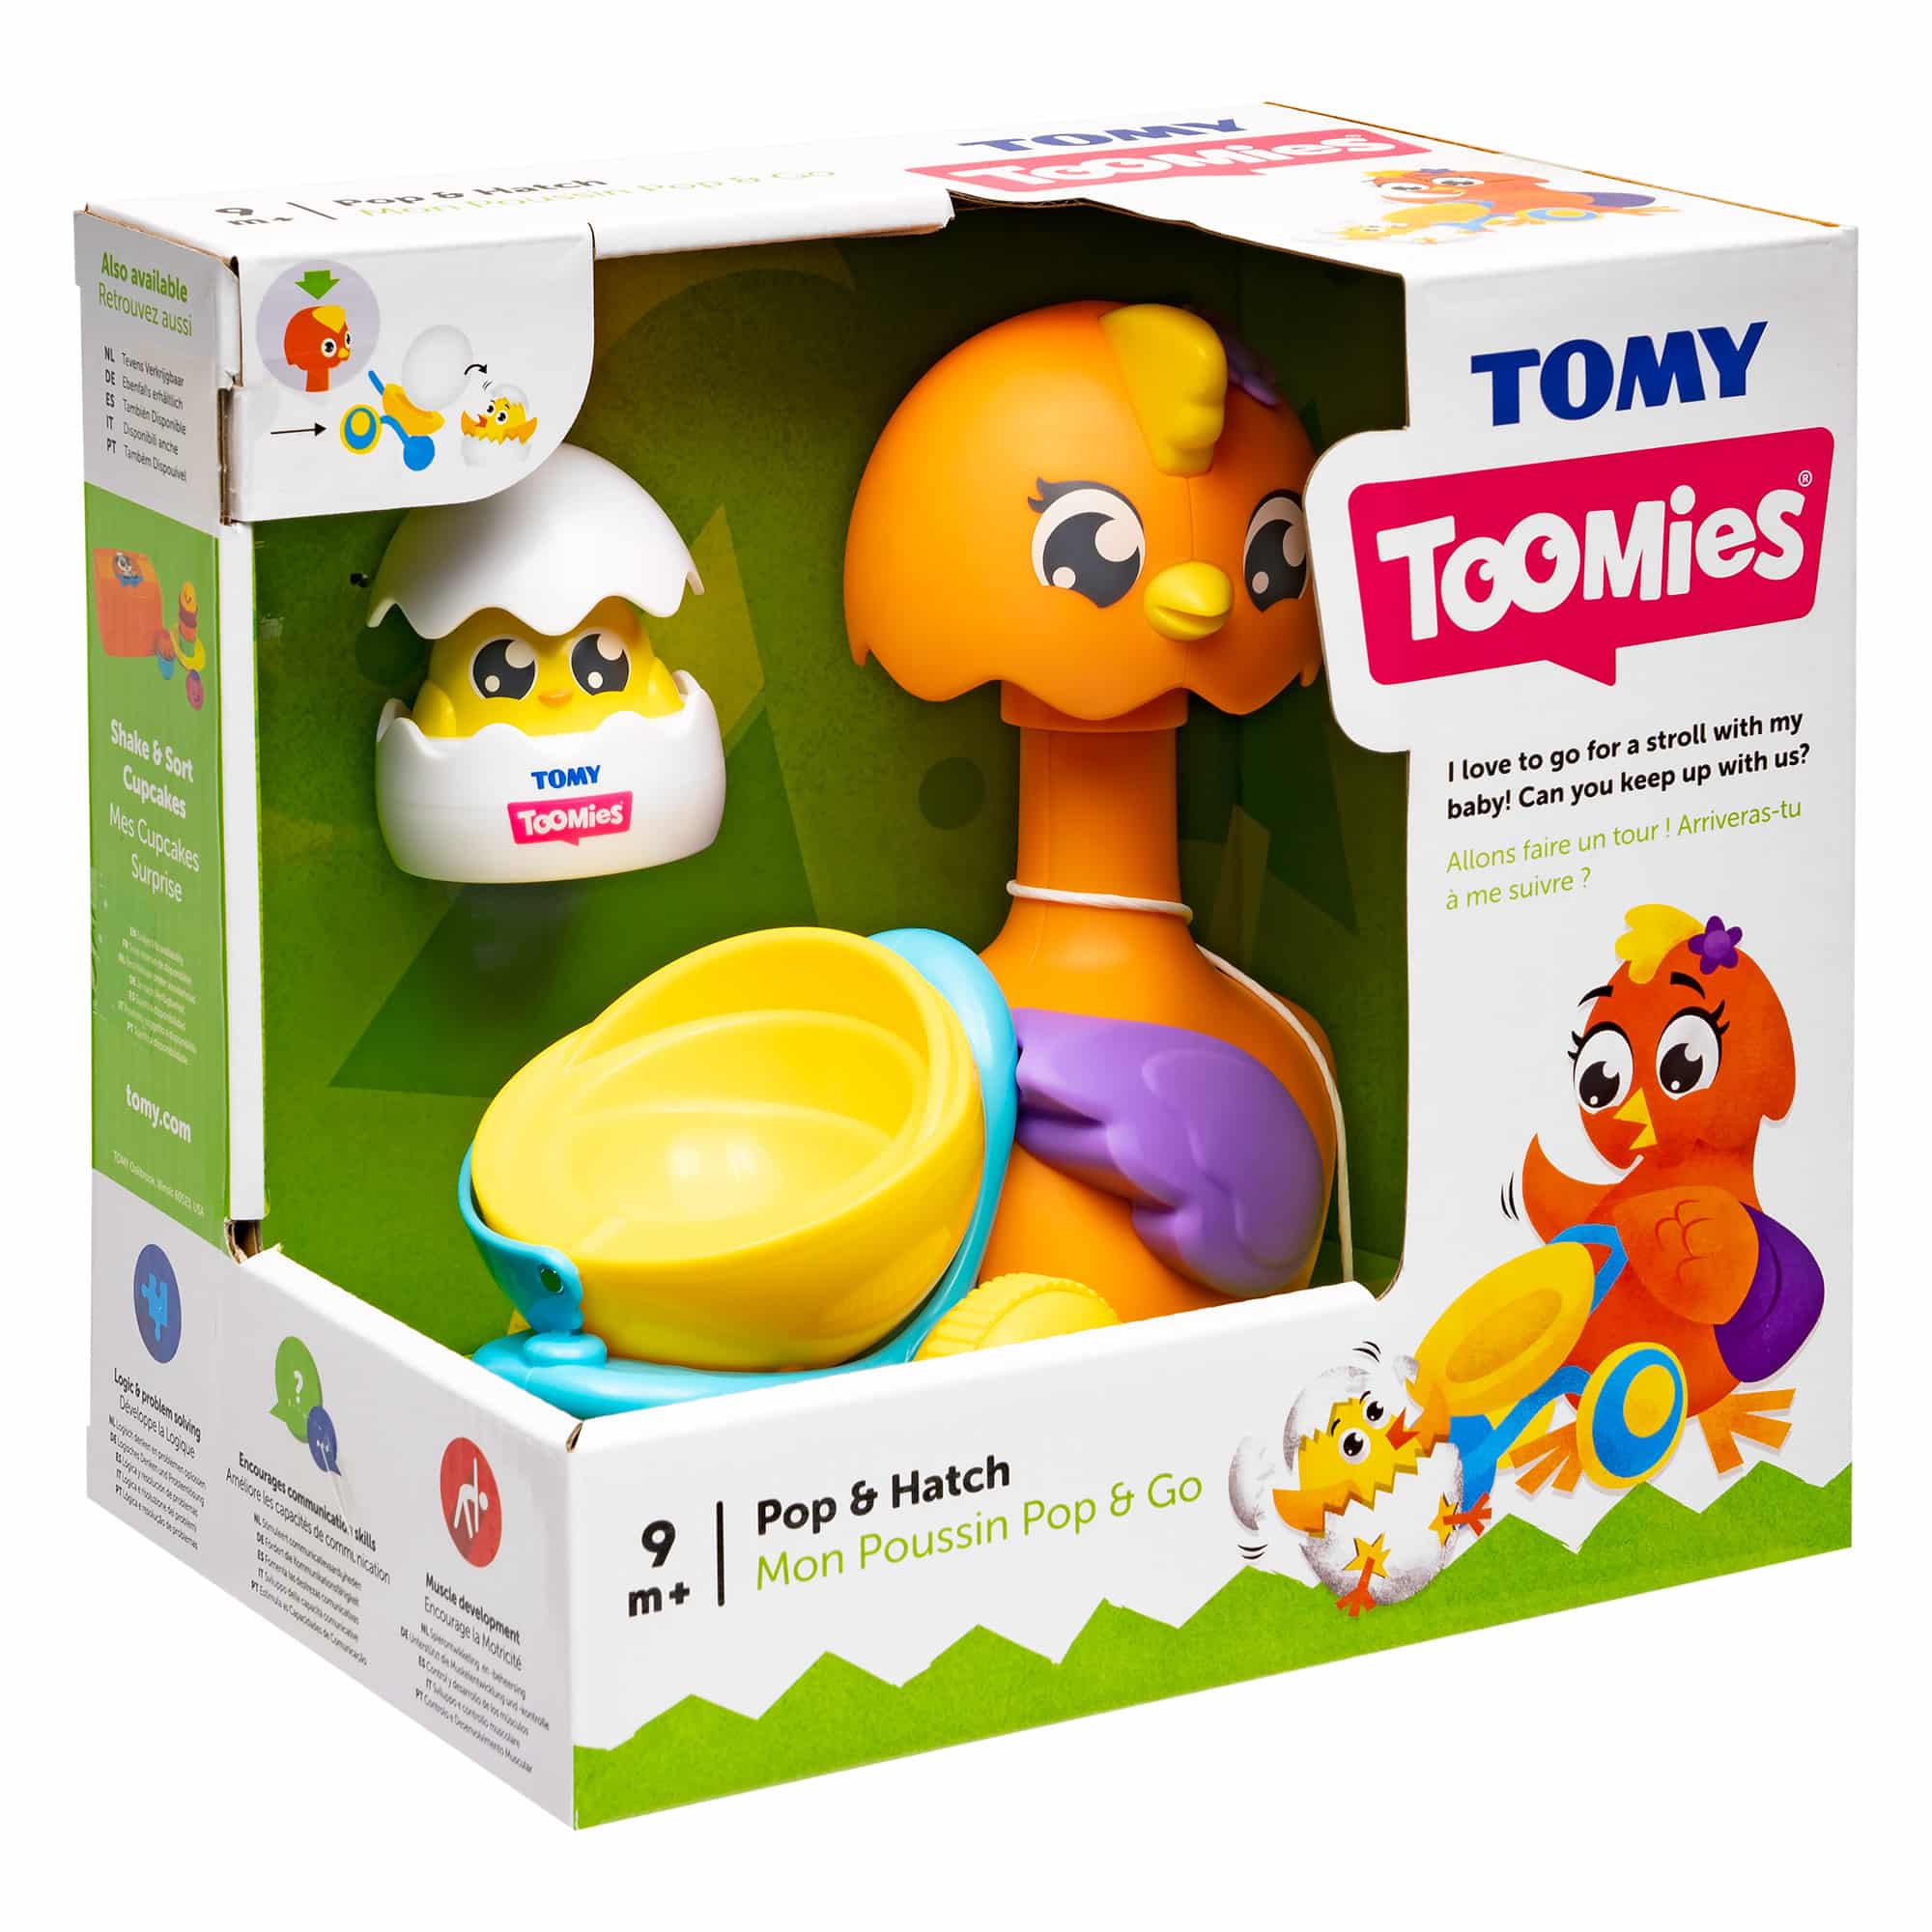 Tomy Toomies - Pop & Hatch